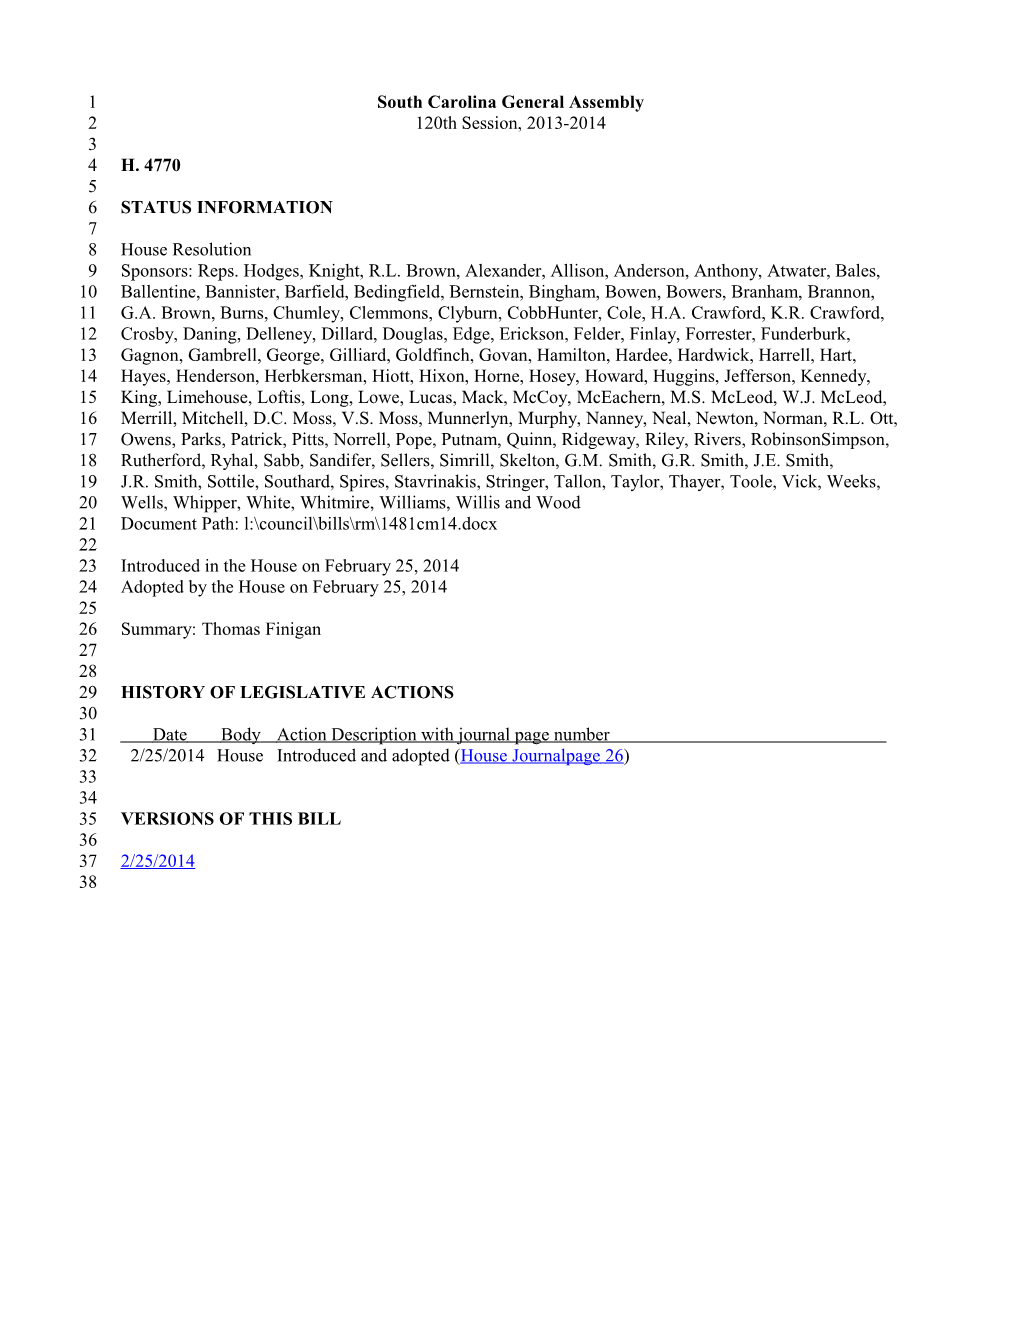 2013-2014 Bill 4770: Thomas Finigan - South Carolina Legislature Online